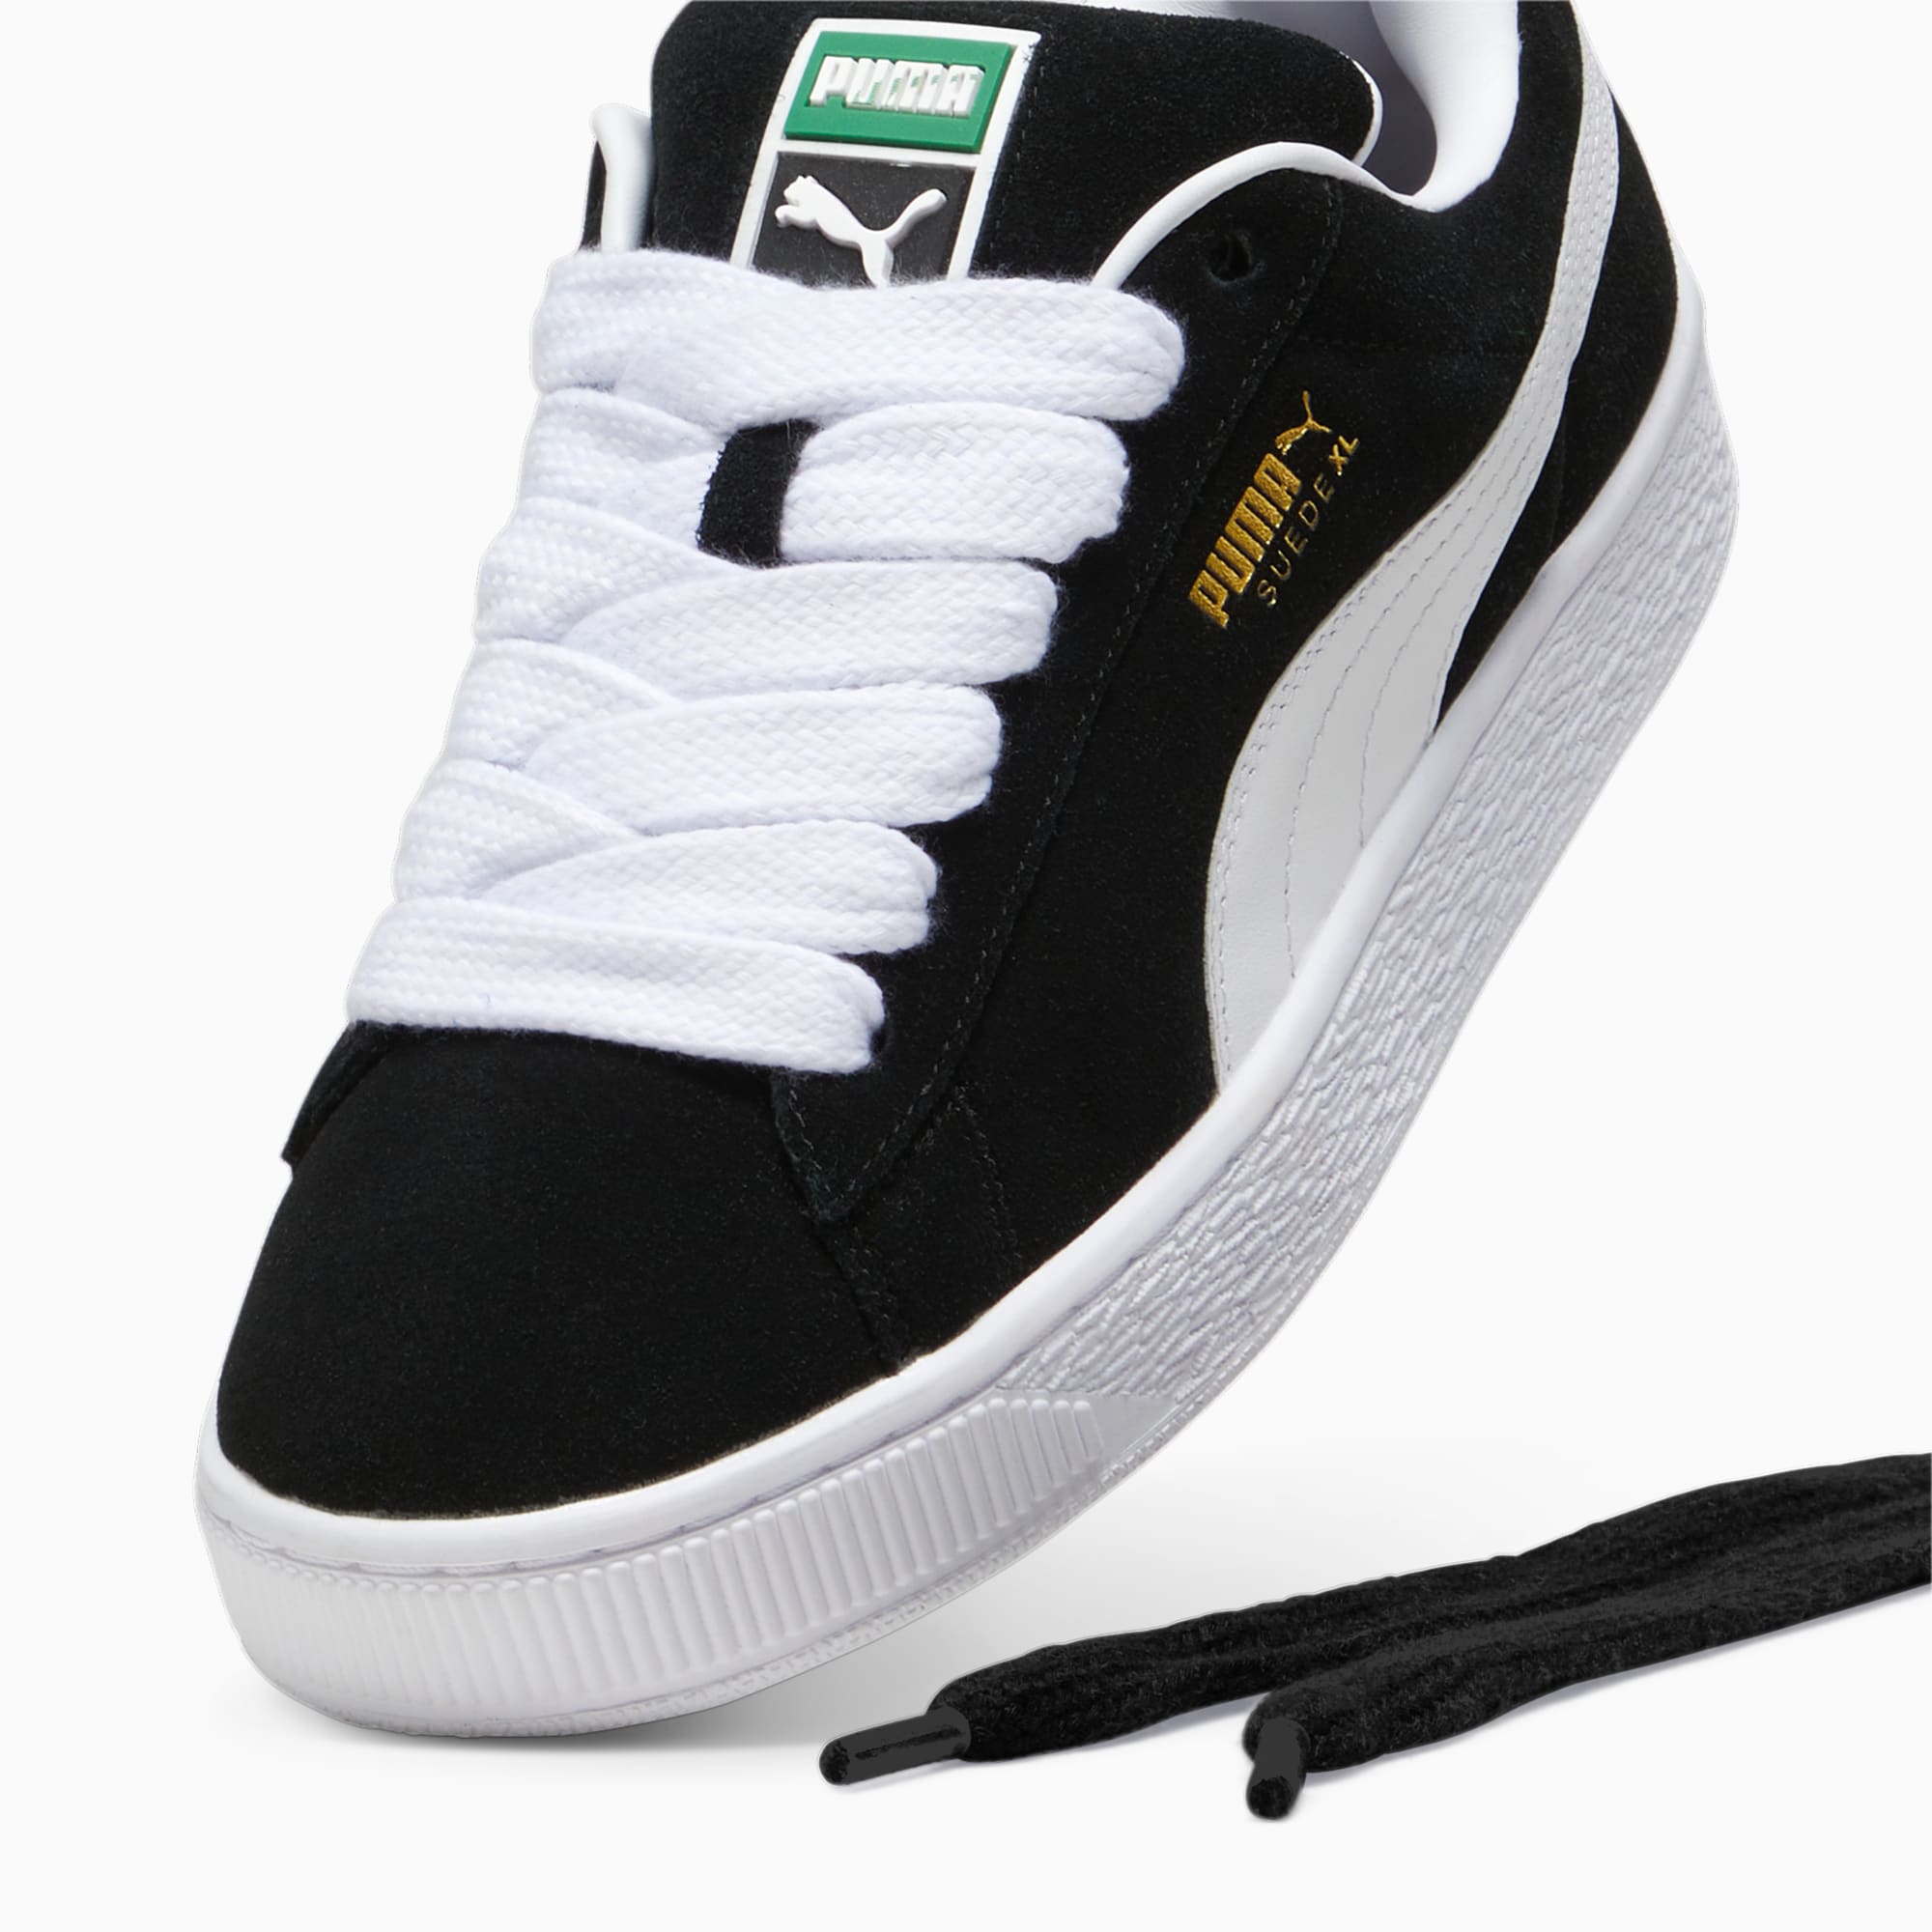 PUMA Suede Xl Sneakers Unisex, Black/White